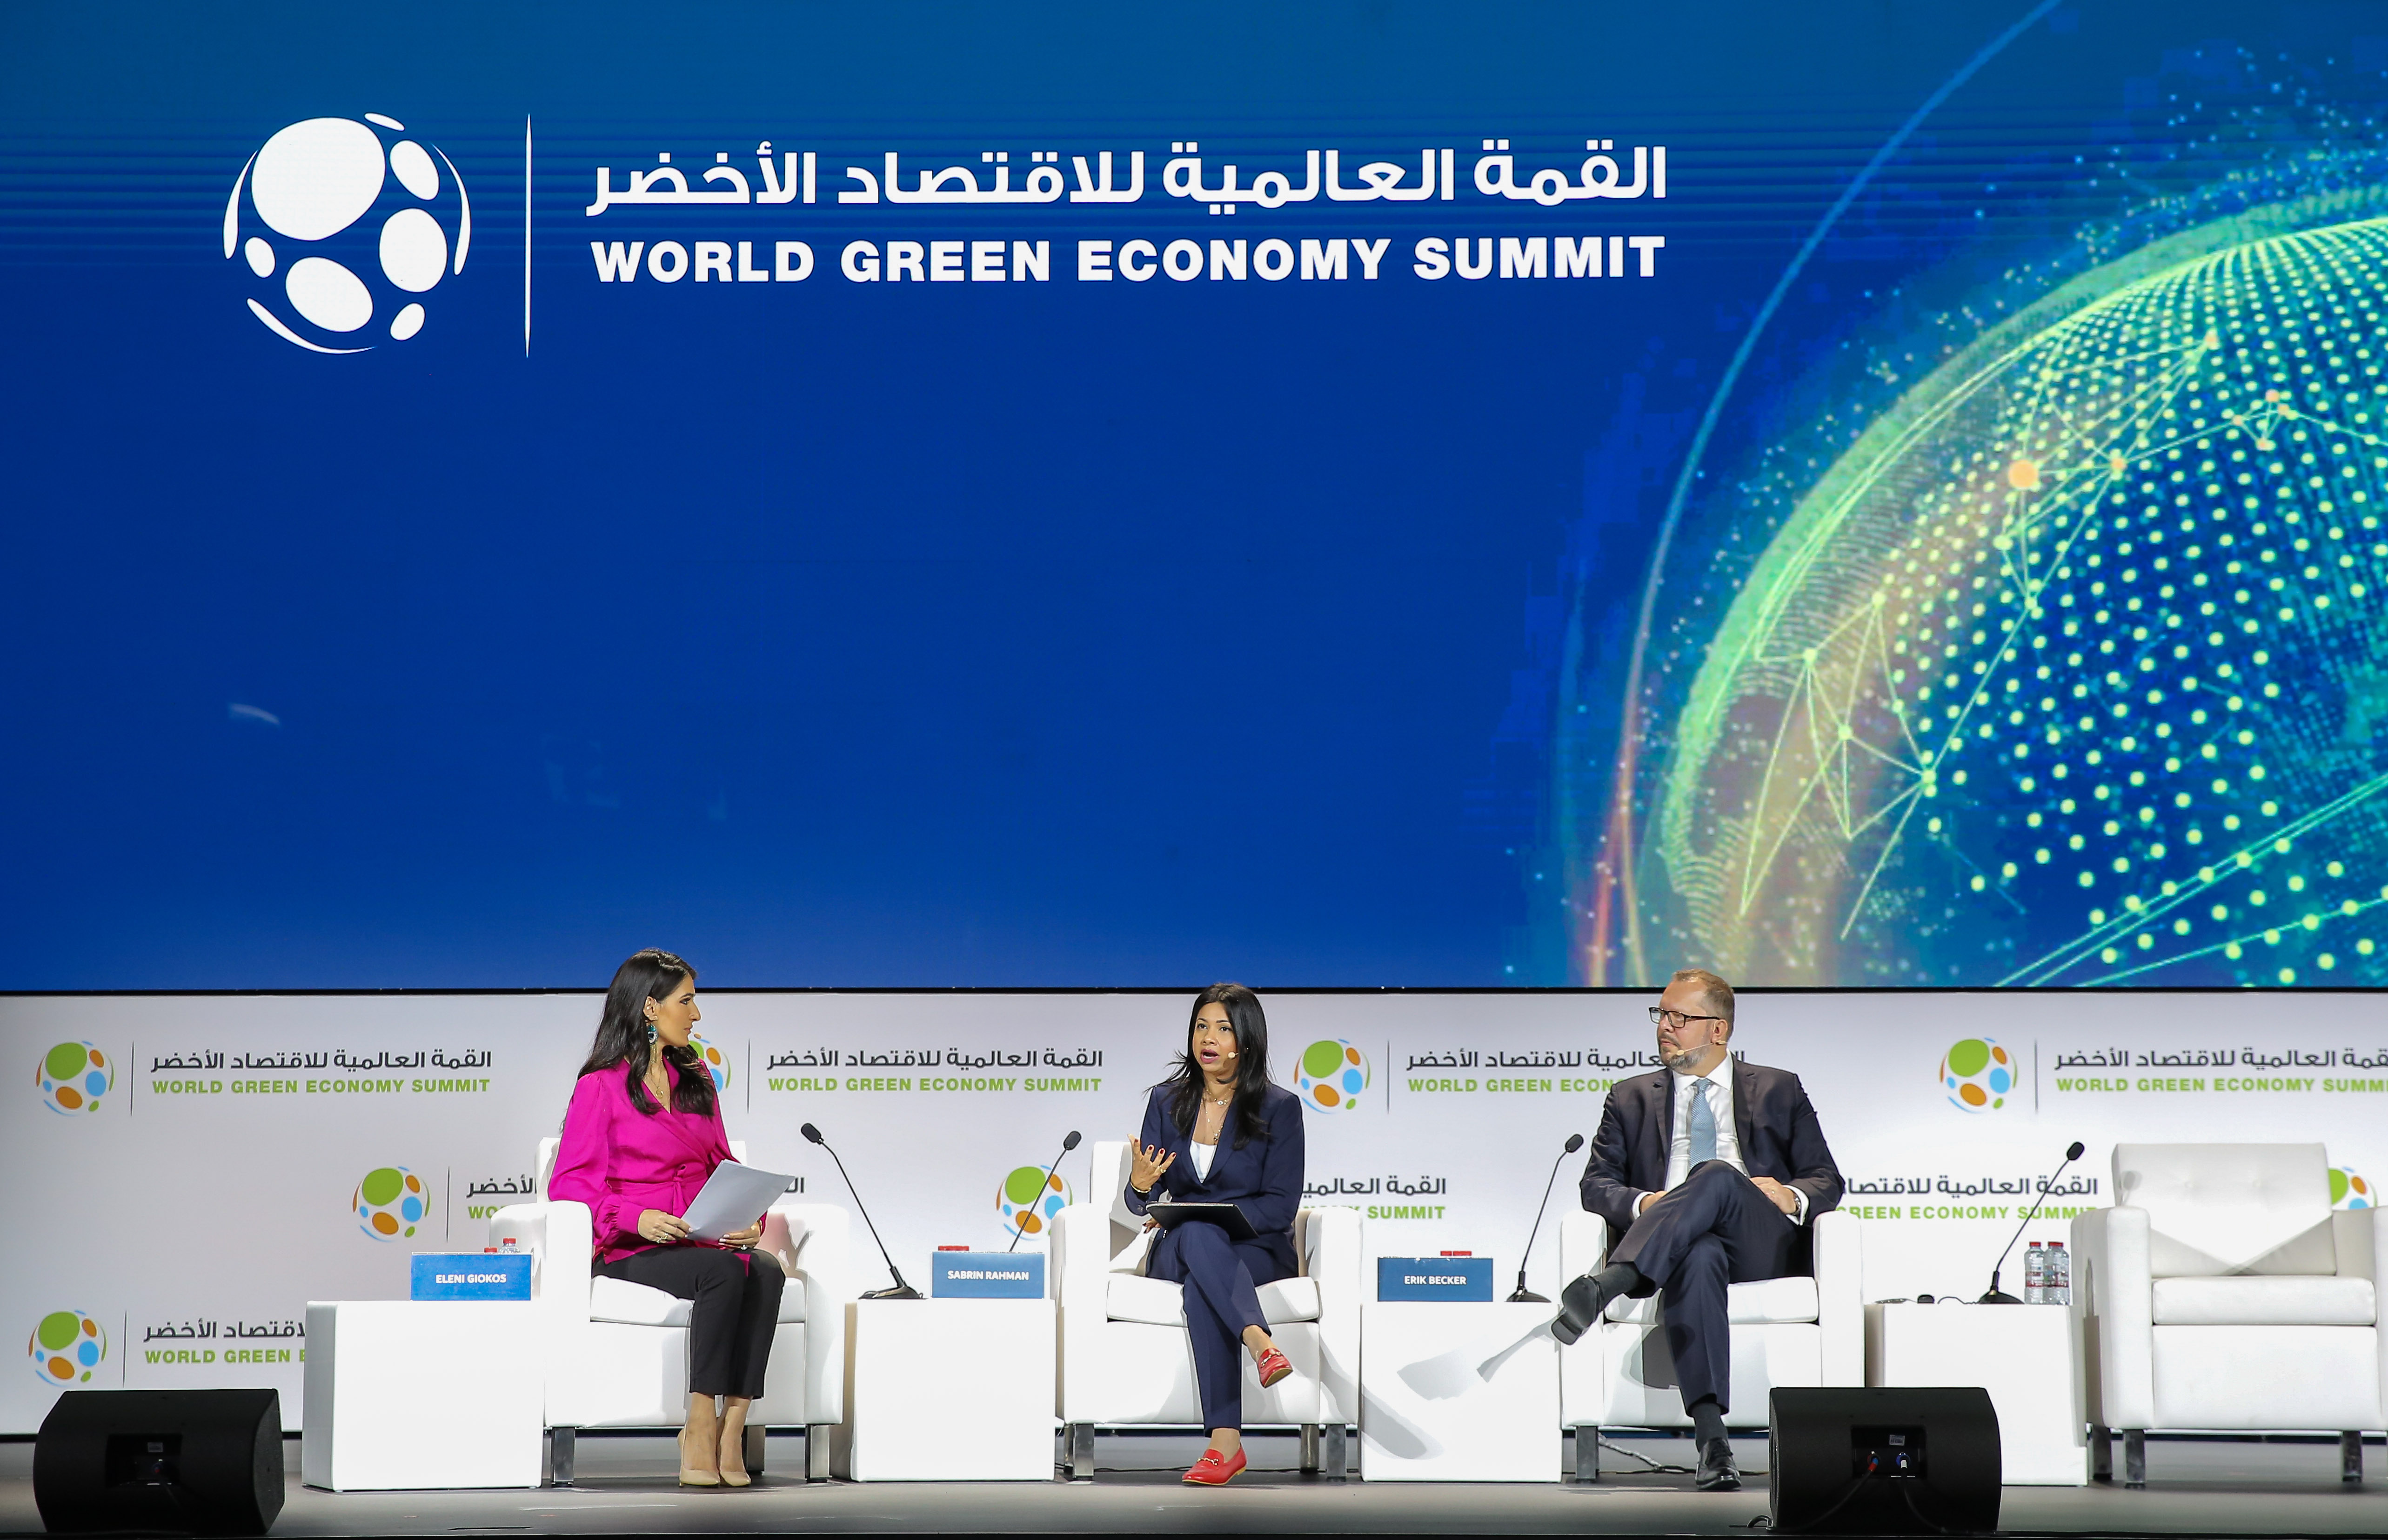 DEWA and WGEO reveal theme of the World Green Economy Summit 2022